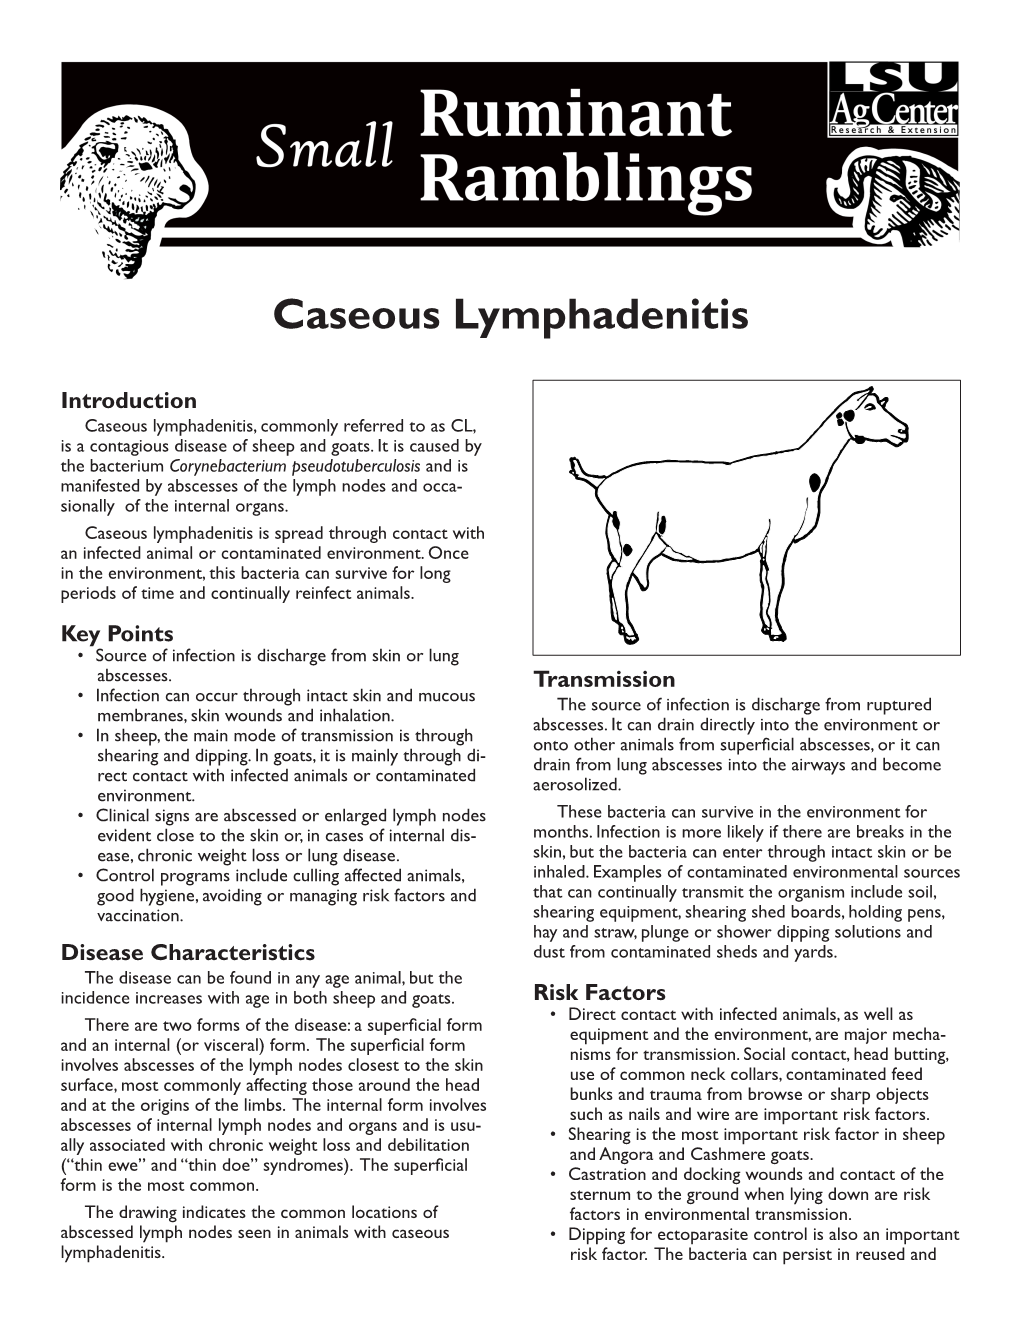 Caseous Lymphadenitis